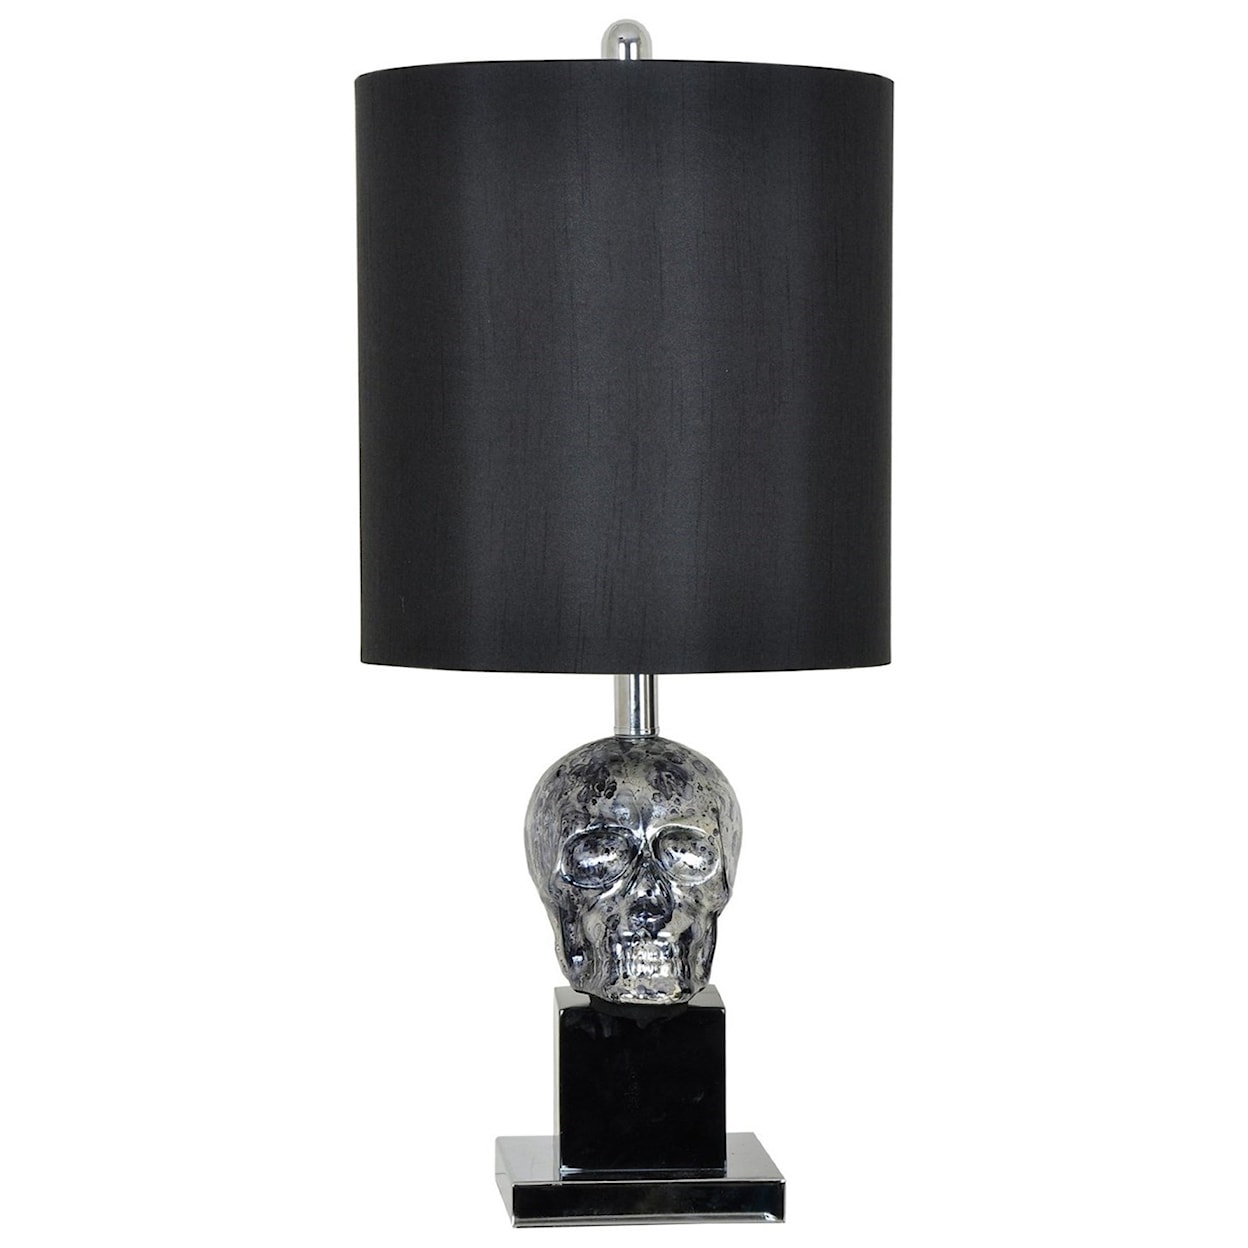 Crestview Collection Lighting Black Skull Table Lamp